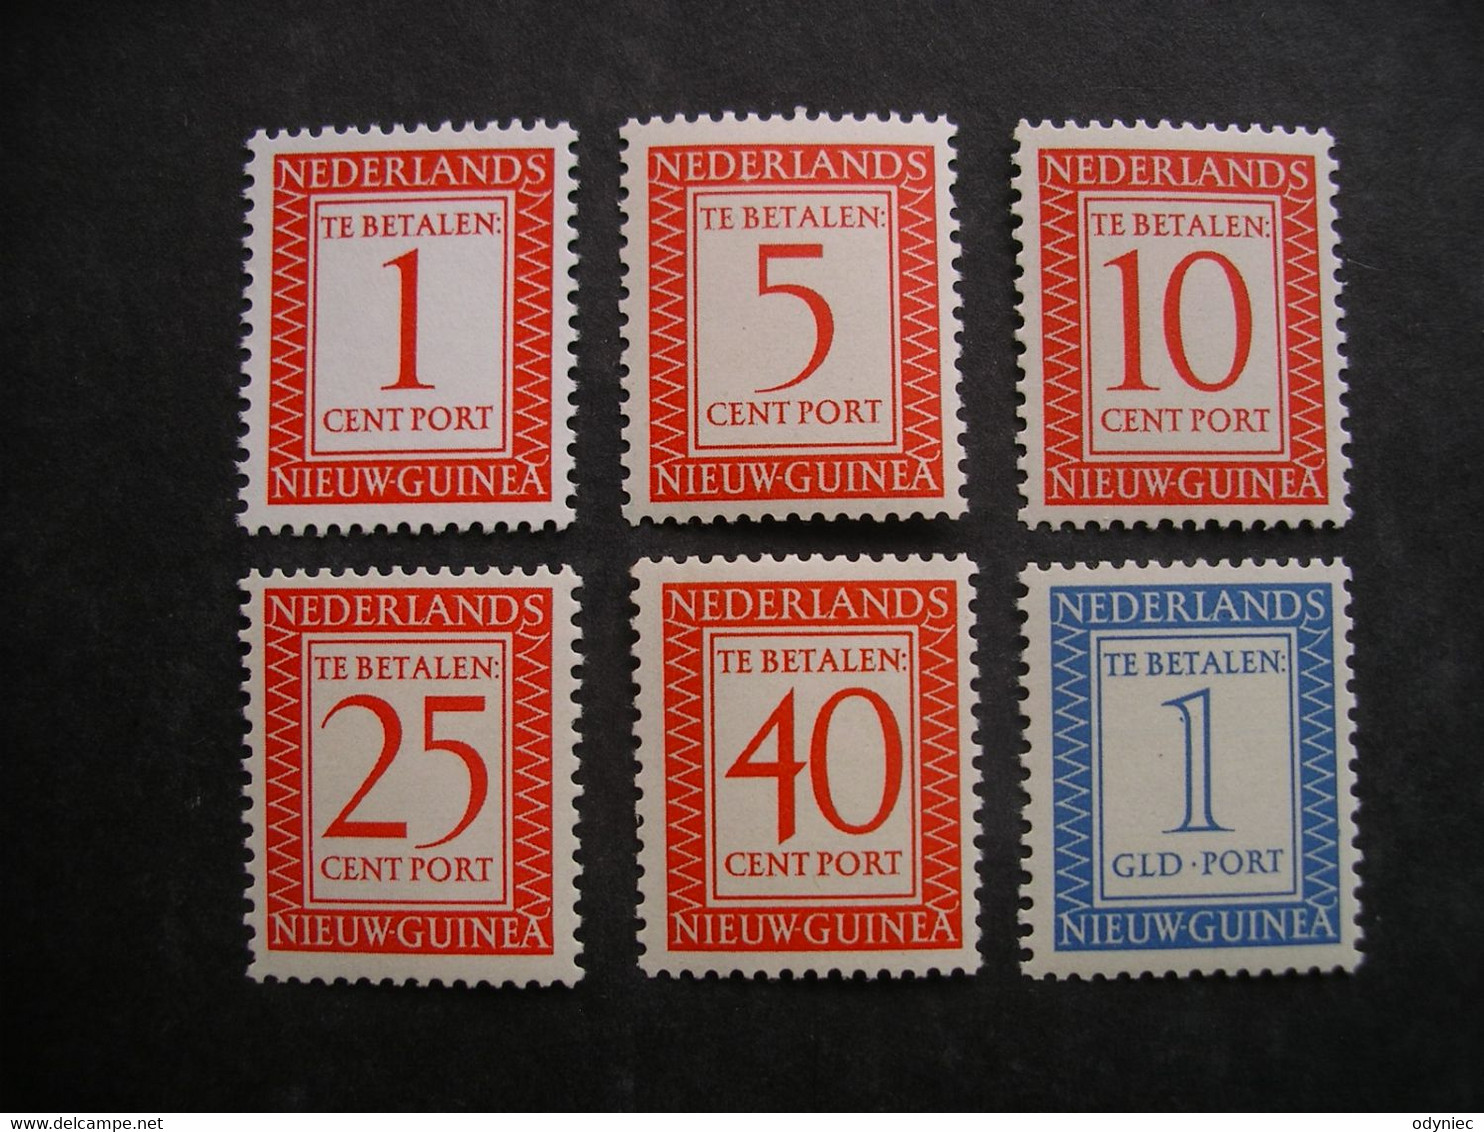 NETHERLANDS NEW GUINEA Postage Due 1957 MNH - Netherlands New Guinea